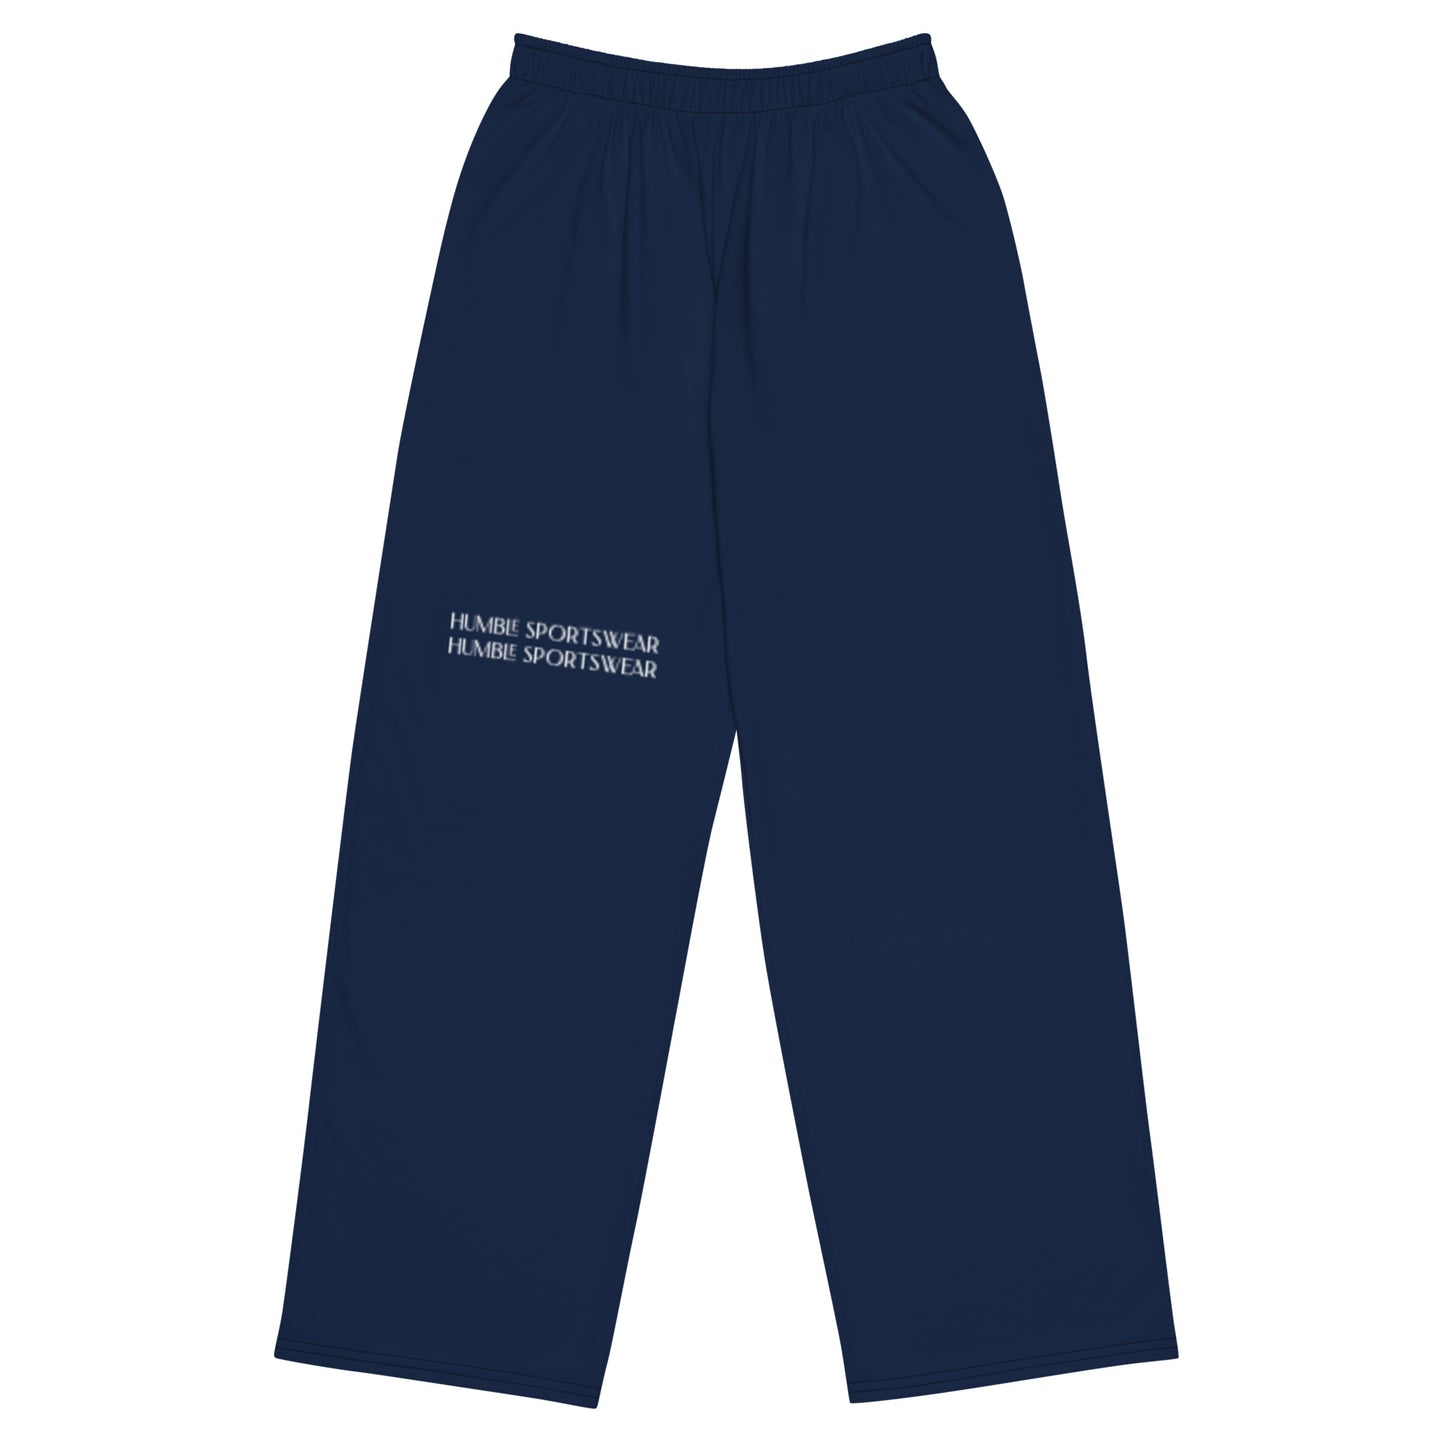 Humble sportswear, men's color match activewear navy blue wide-leg loungewear pants